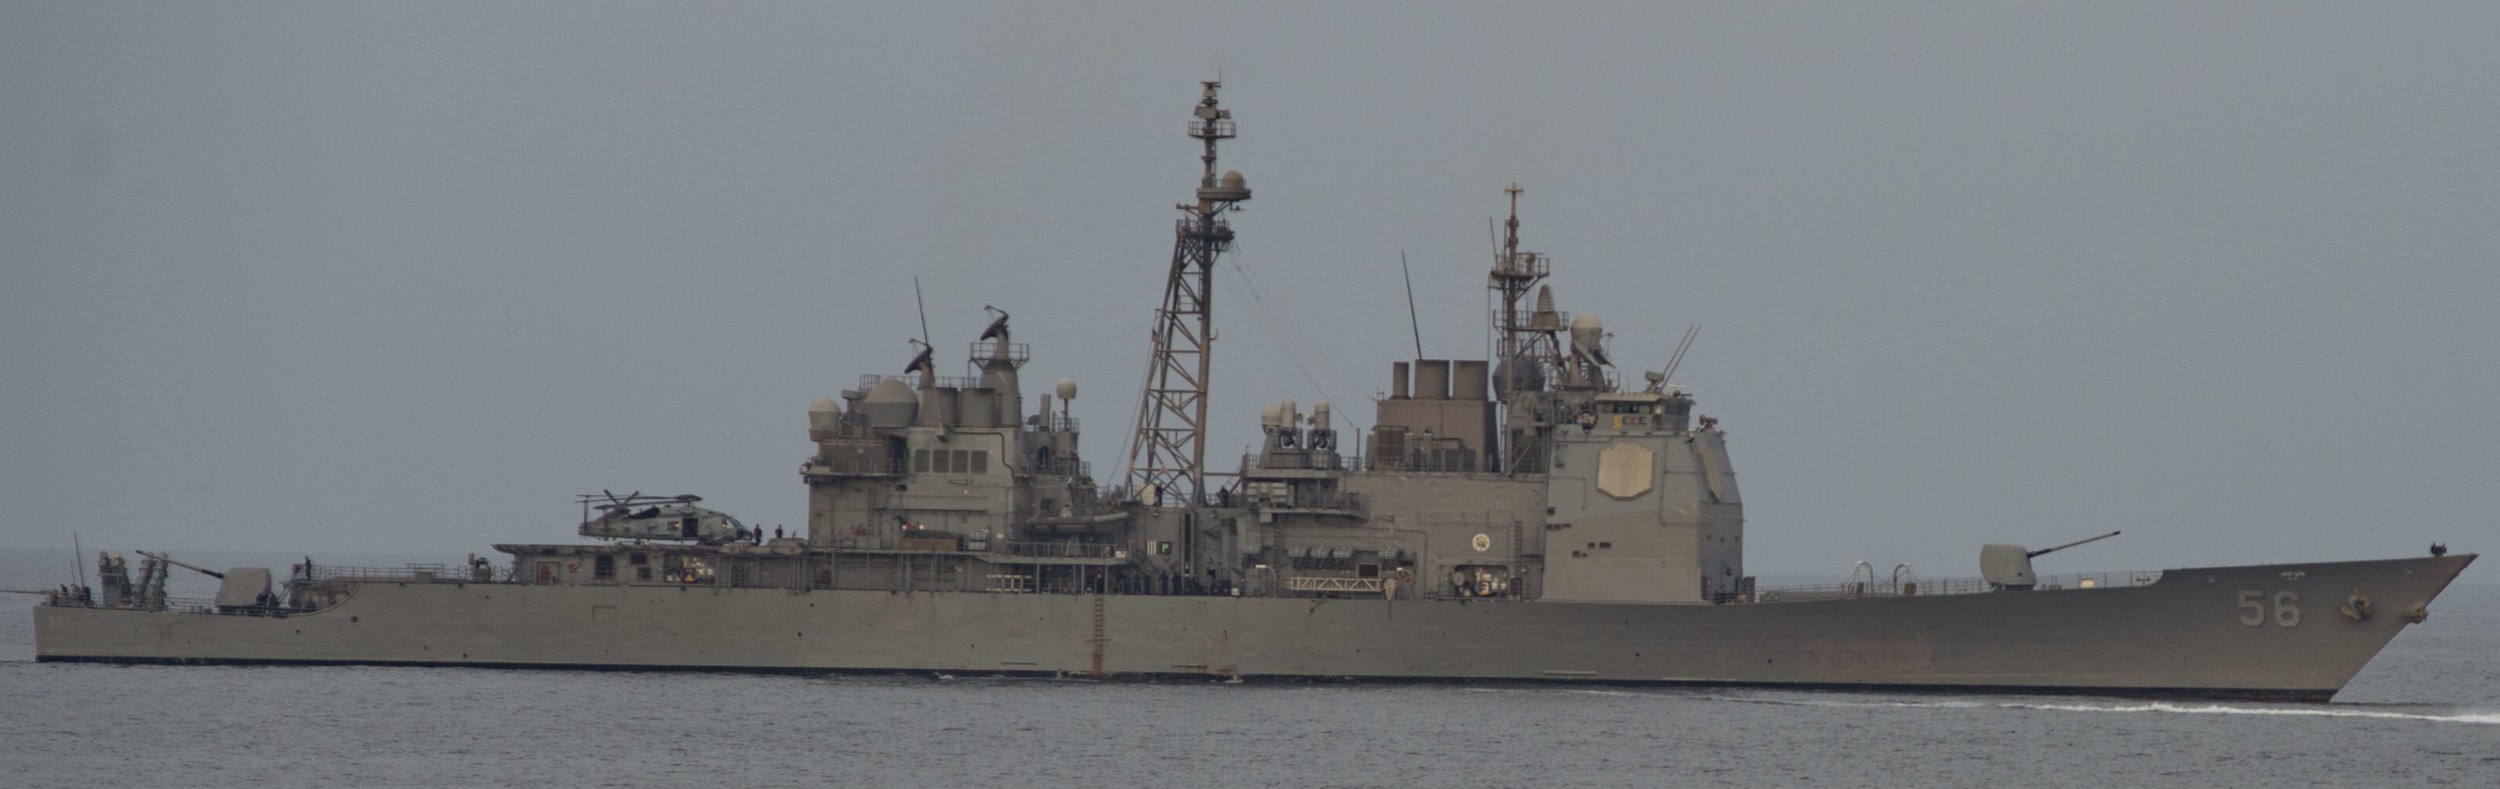 cg-56 uss san jacinto ticonderoga class guided missile cruiser aegis us navy arabian gulf 81